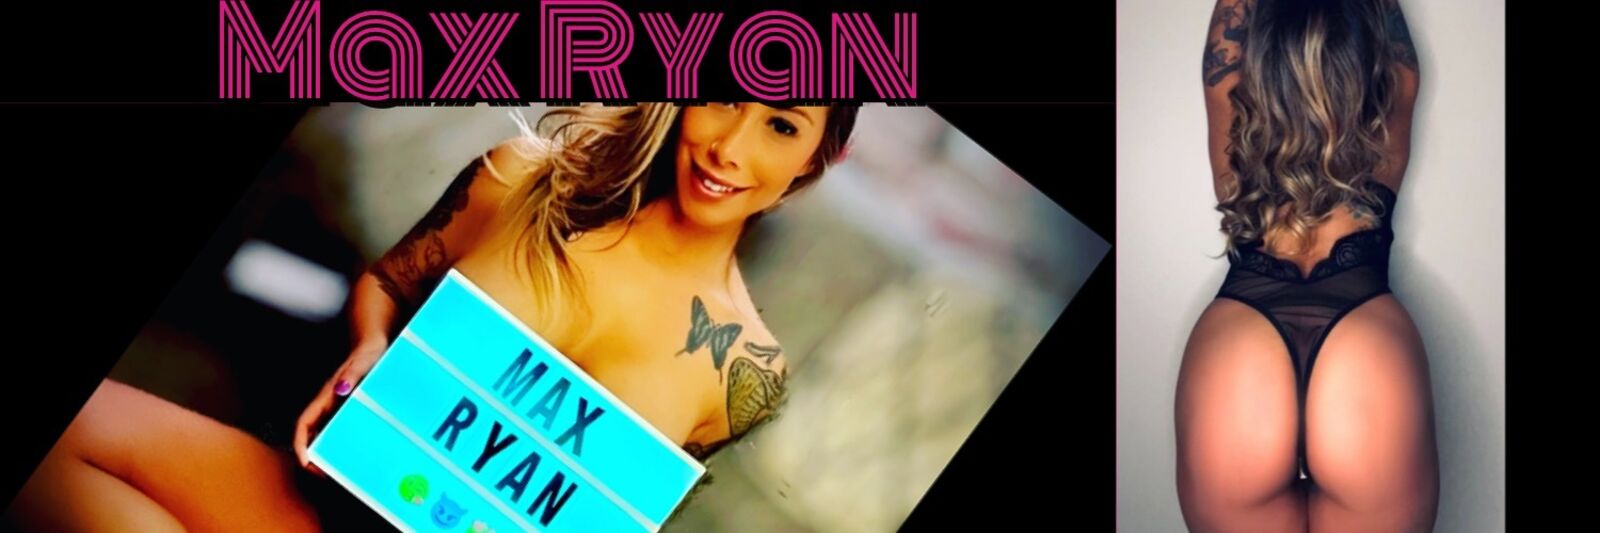 See Max Ryan profile